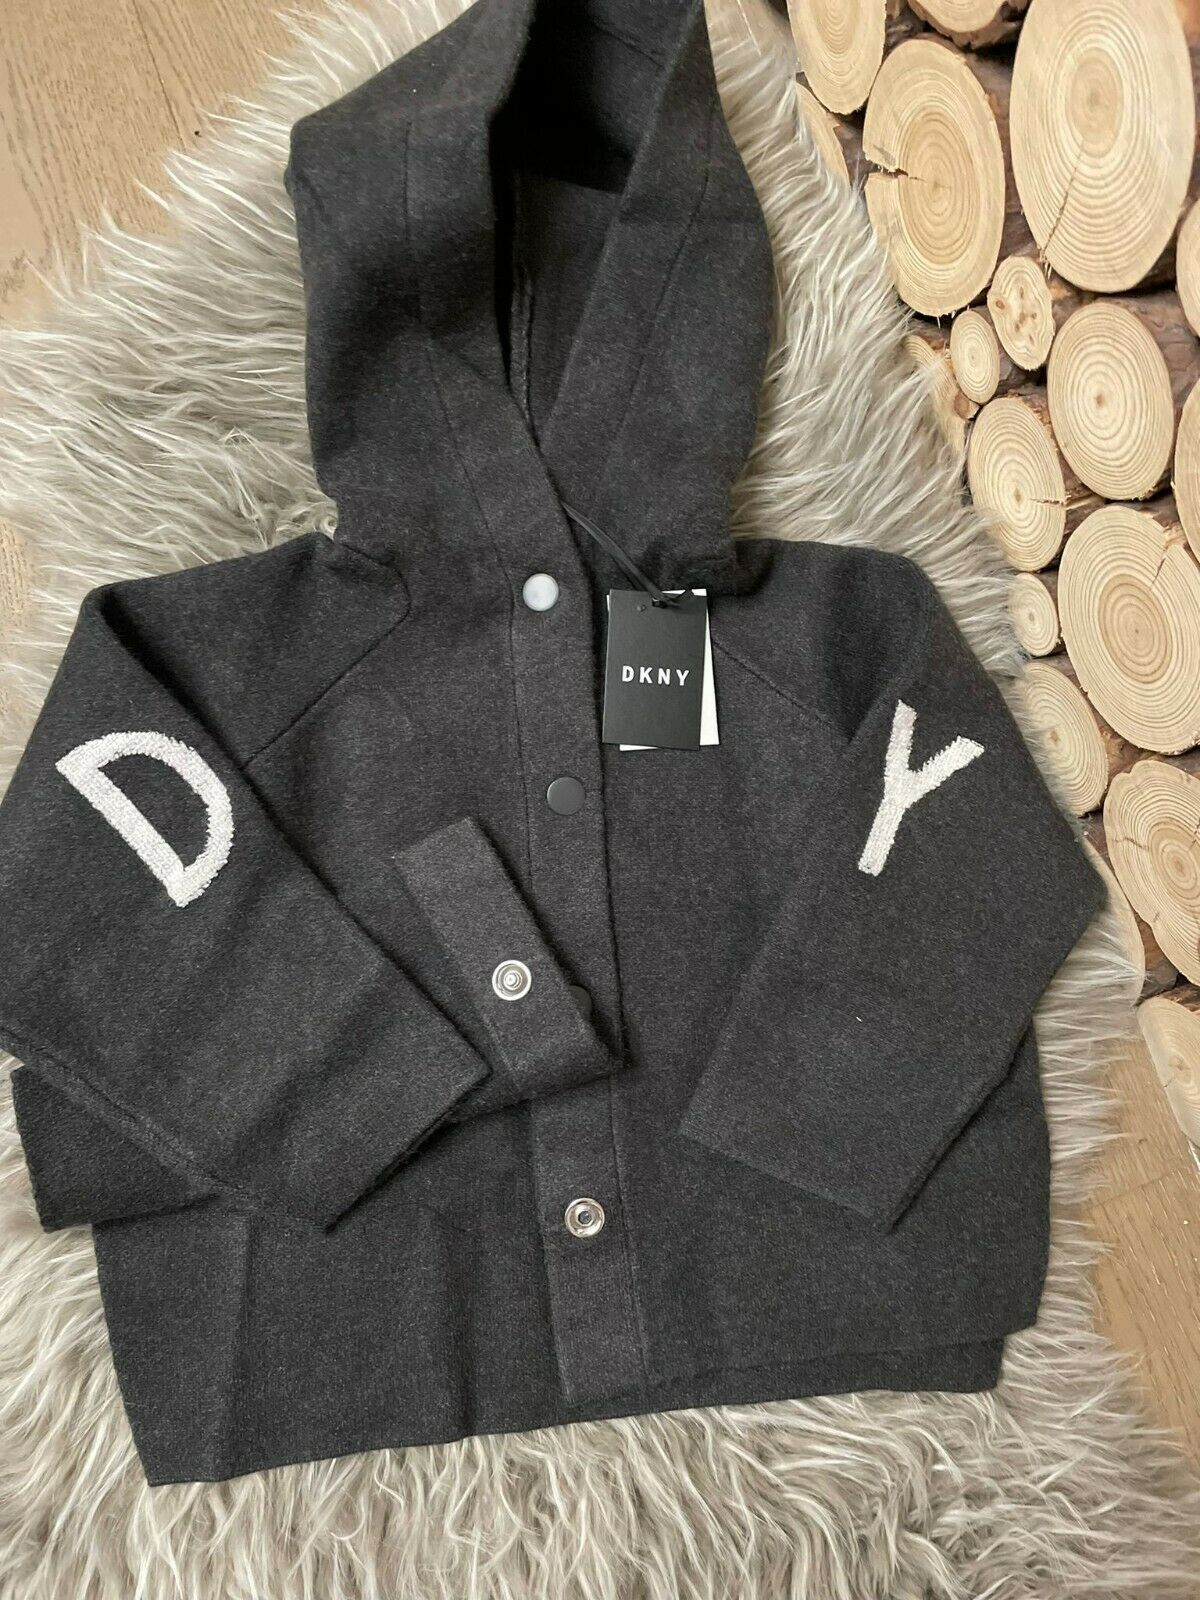 NEW Genuine DKNY kids jacket D35Q40/A48 grey for girls hood buttons 6Y 8Y 12Y - $56.50